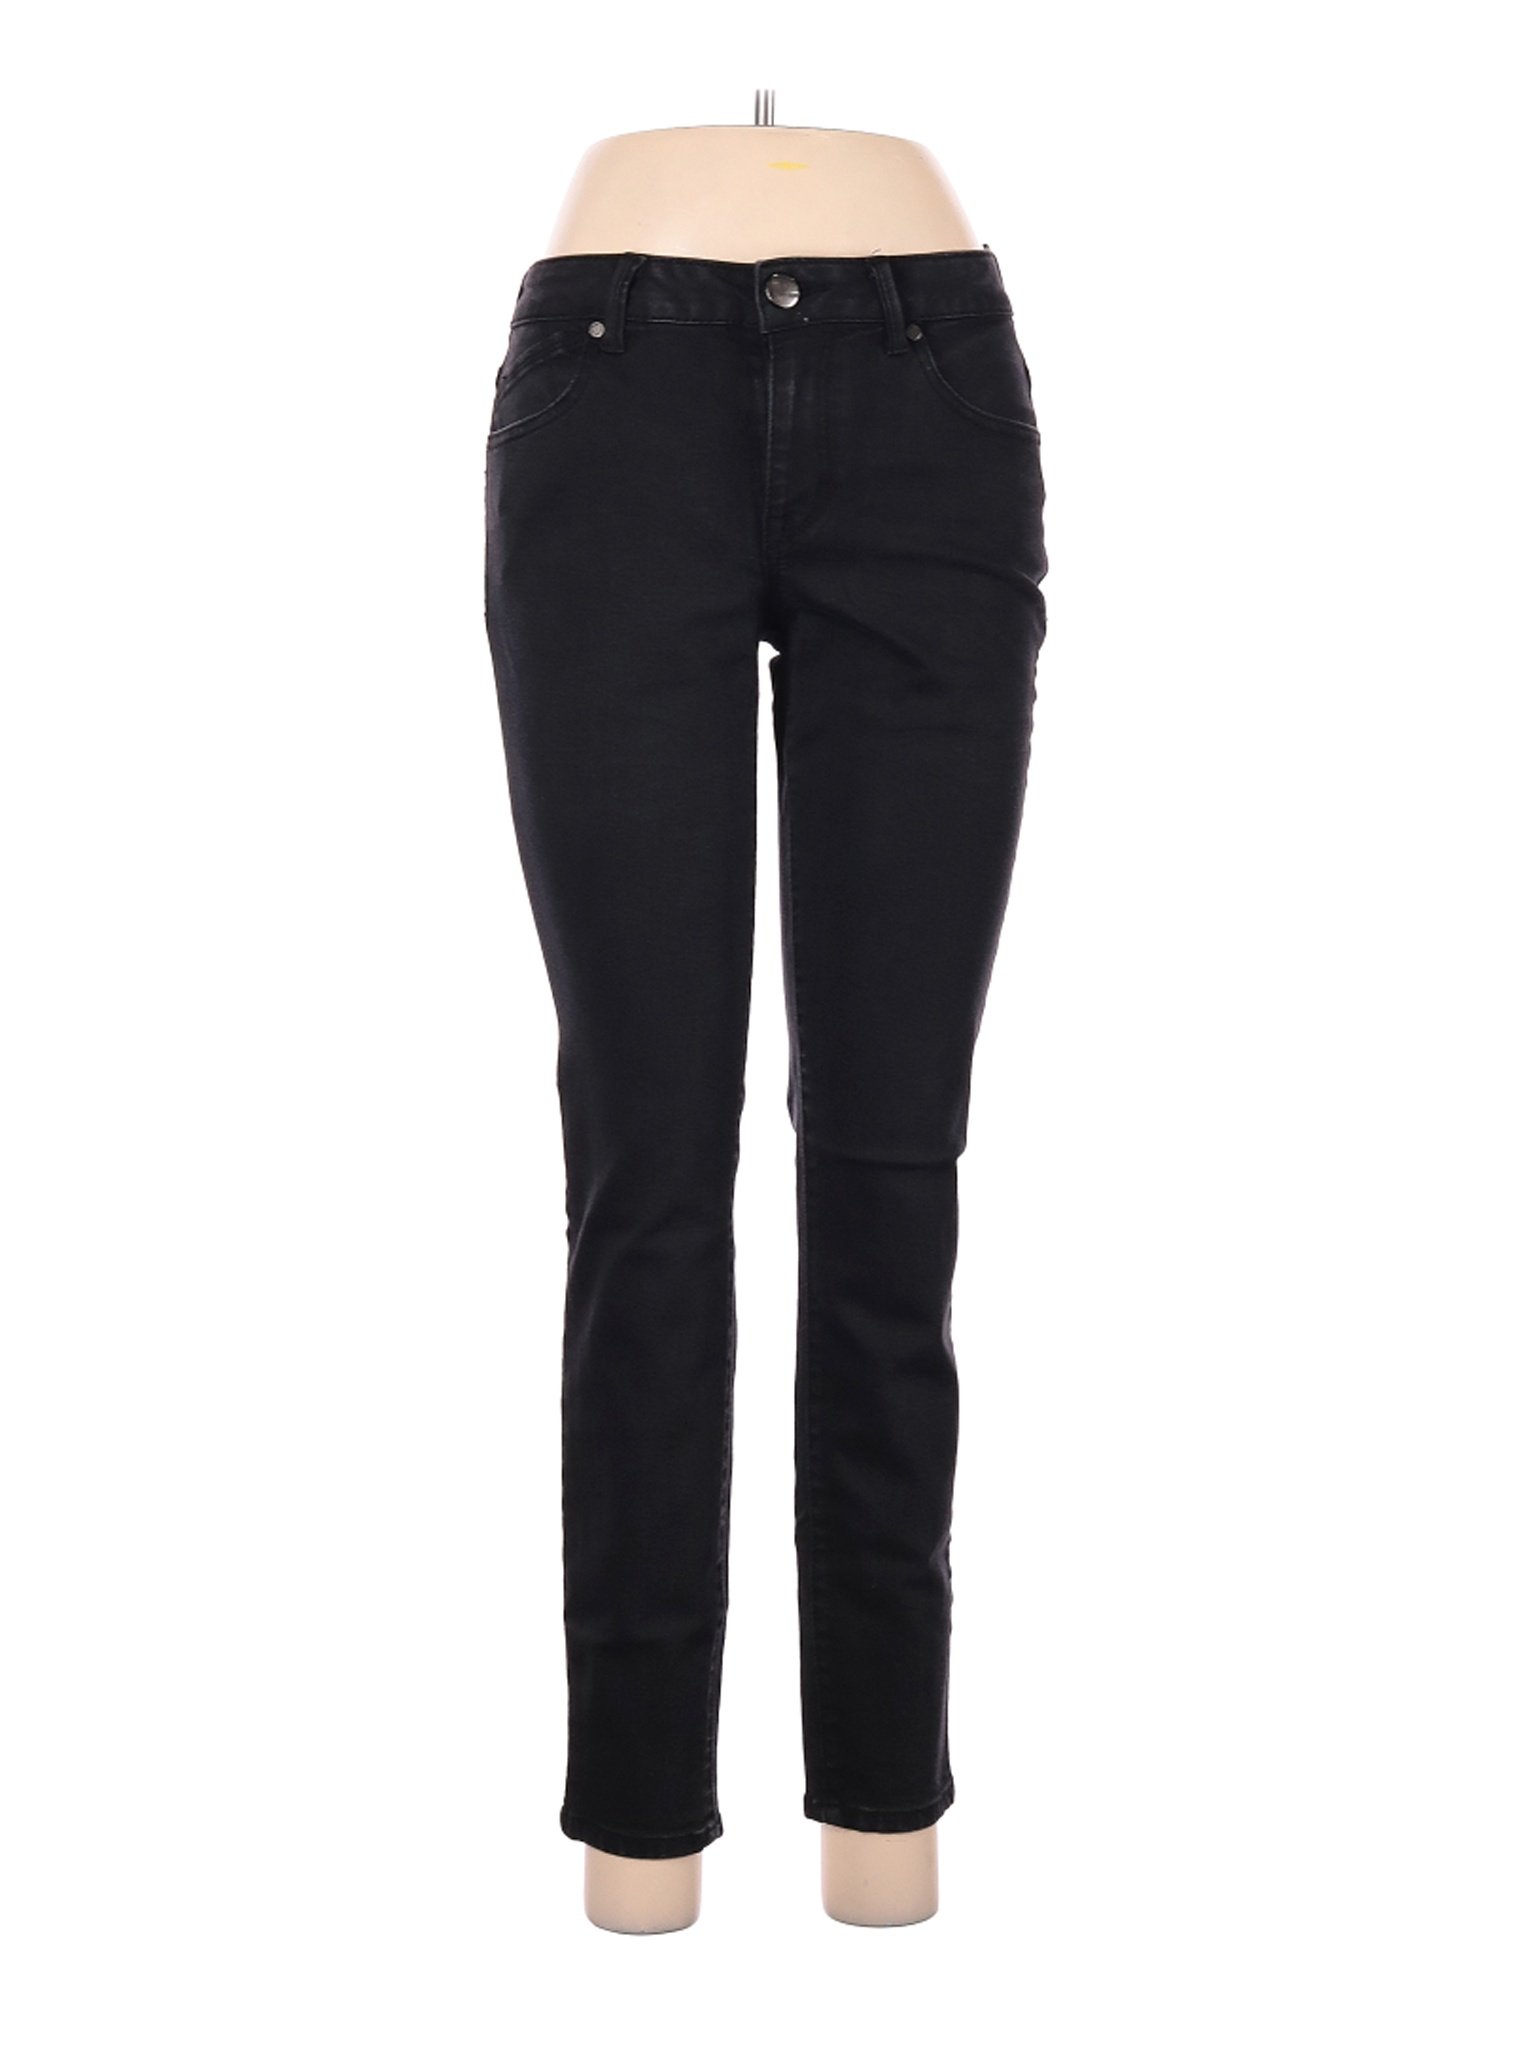 1822 Denim Women Black Jeans 8 | eBay